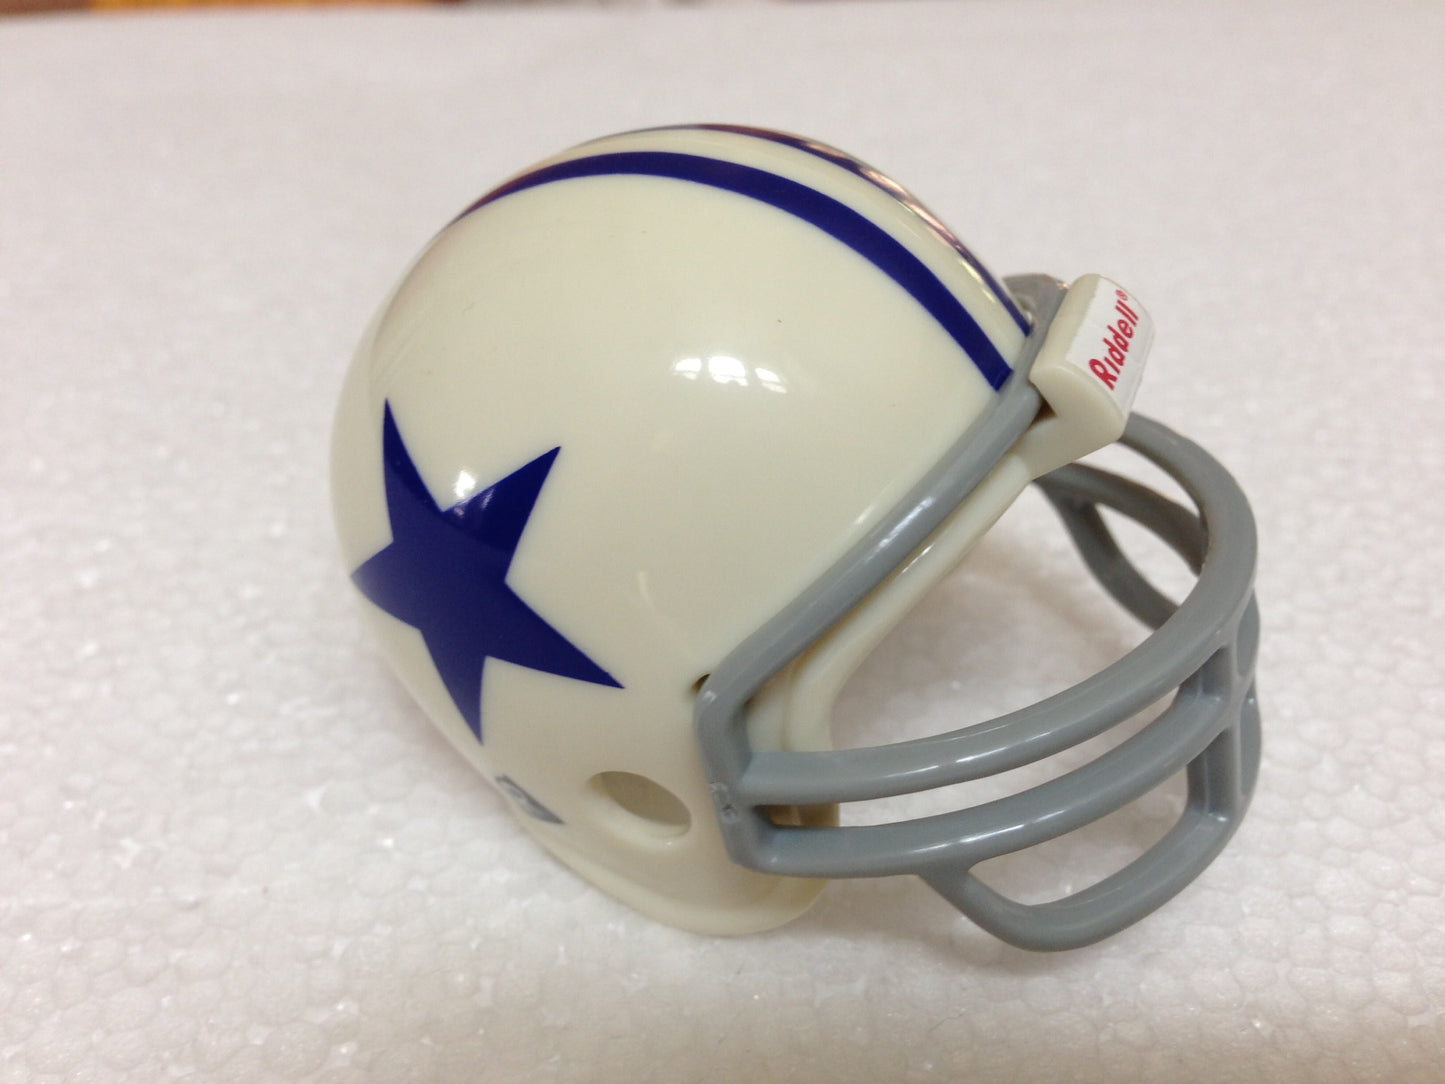 Riddell Pocket Pro and Throwback Pocket Pro mini helmets ( NFL ): Dallas Cowboys 1960-1963 Throwback Pocket Pro Helmet (Blue Star and stripes on white Helmet) very rare